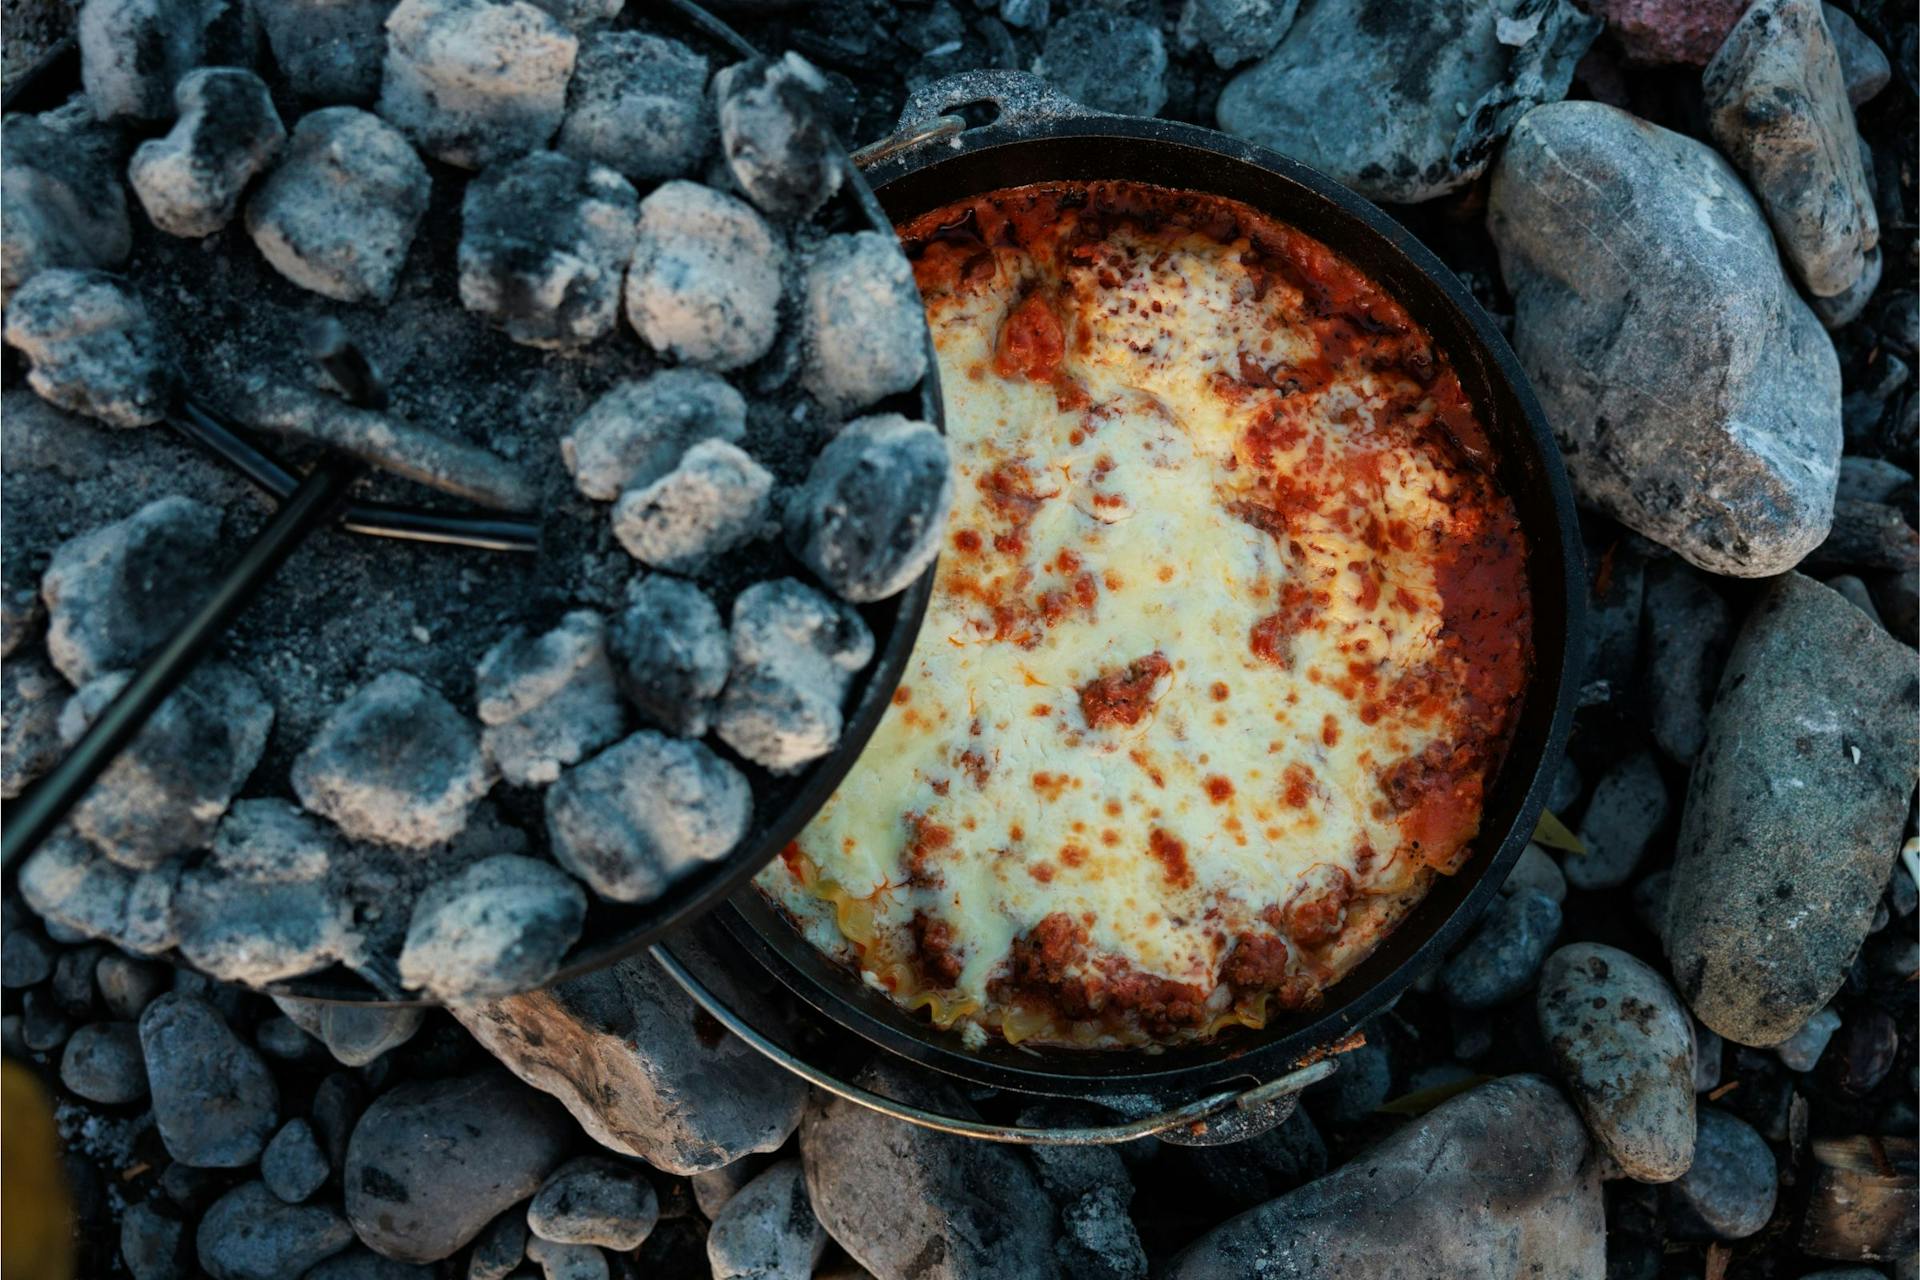 Delicious Dutch-Oven Campfire Lasagna — CAMP KITCHEN